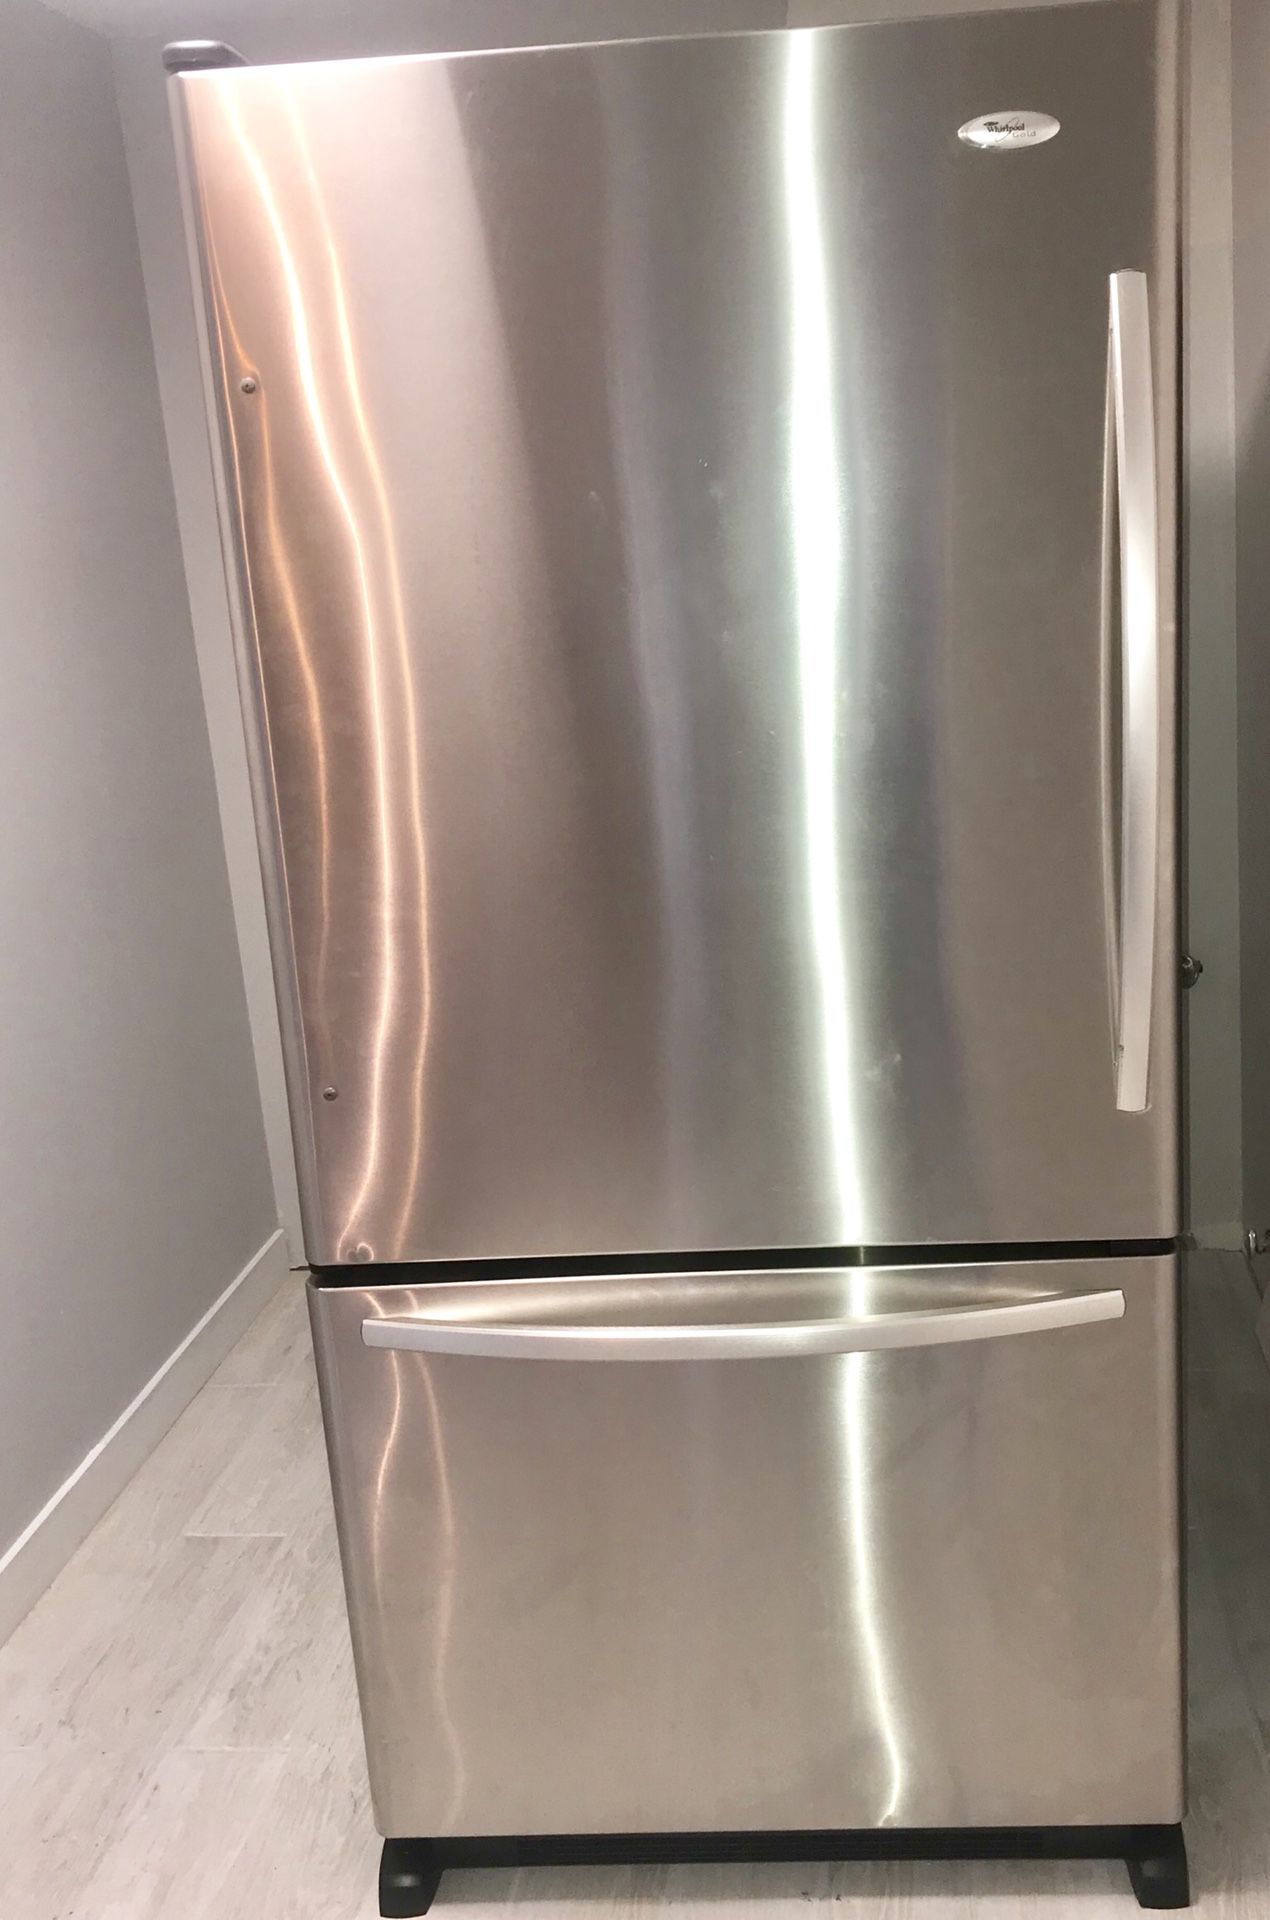 Whirlpool botttom mount refrigerator 33” stainless steel like new! Bottom freezer / top refrigerador acero inoxidable